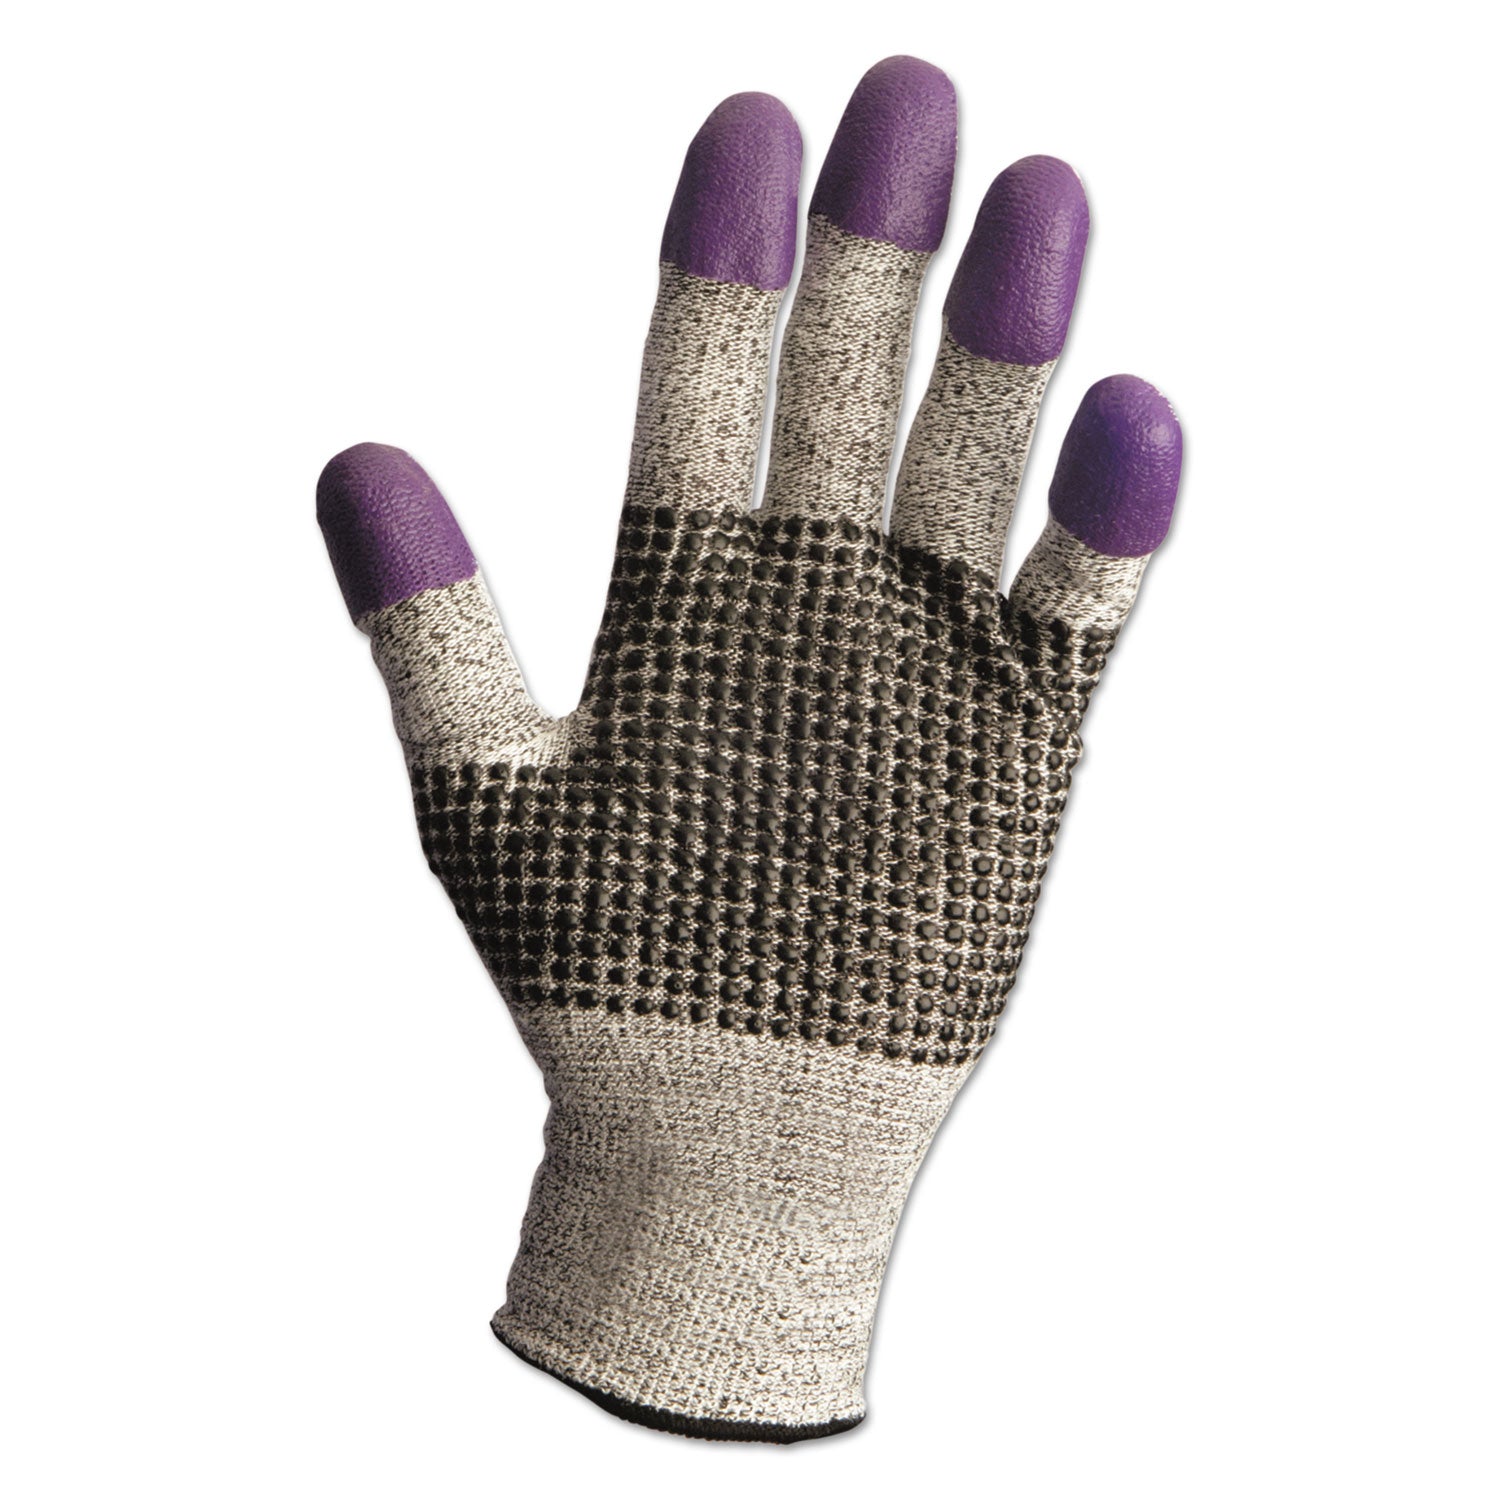 g60-purple-nitrile-gloves-240-mm-length-large-size-9-black-white-pair_kcc97432 - 1